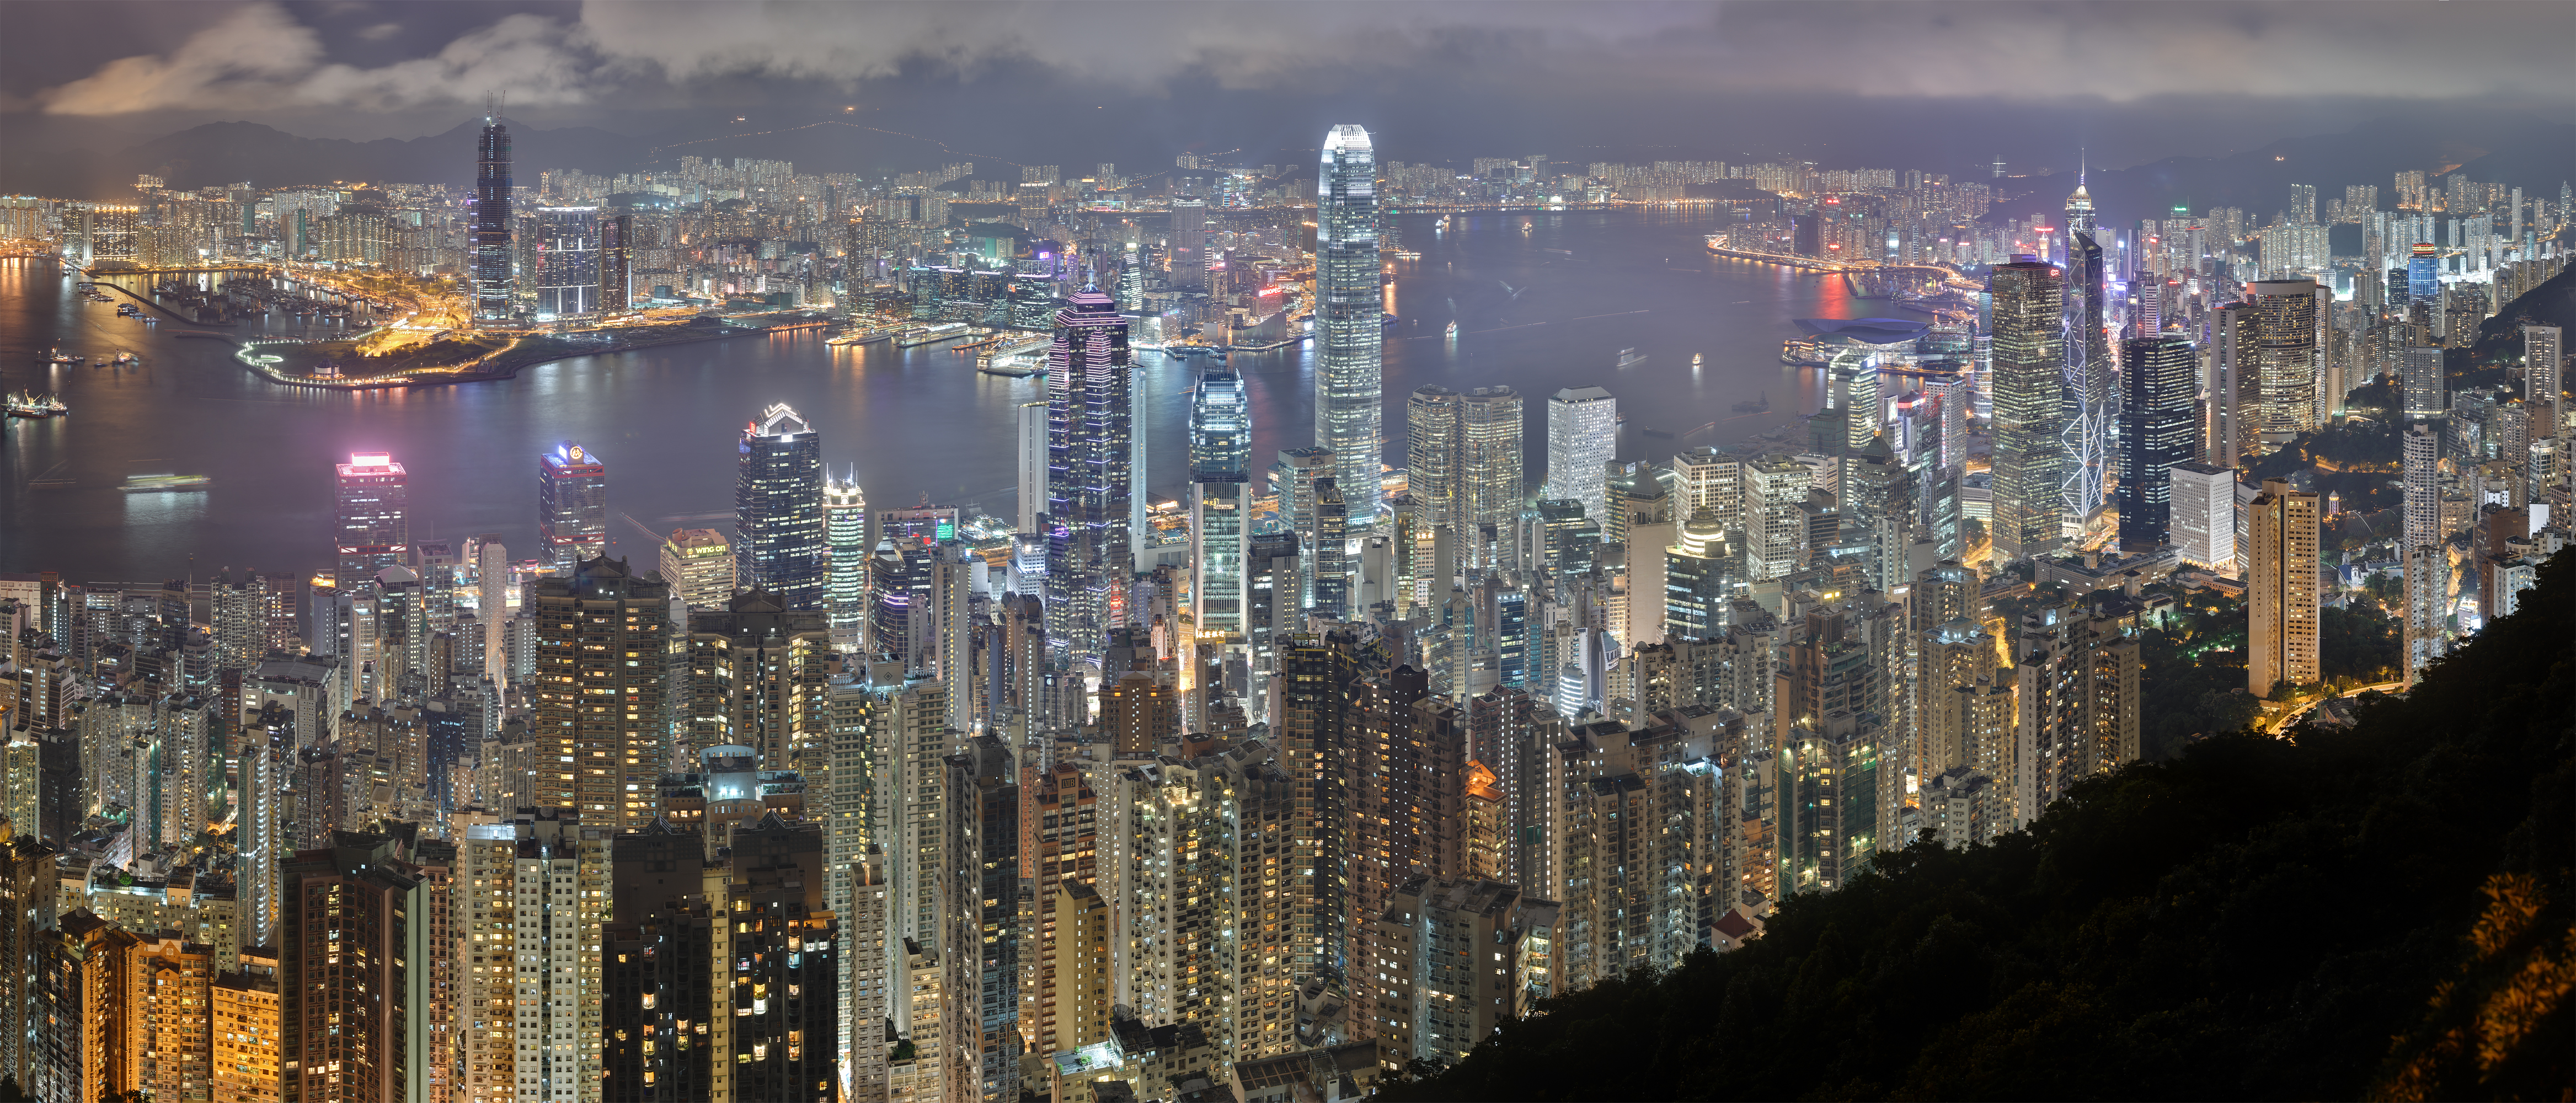 File:Hong Kong Night Skyline.jpg - Wikipedia